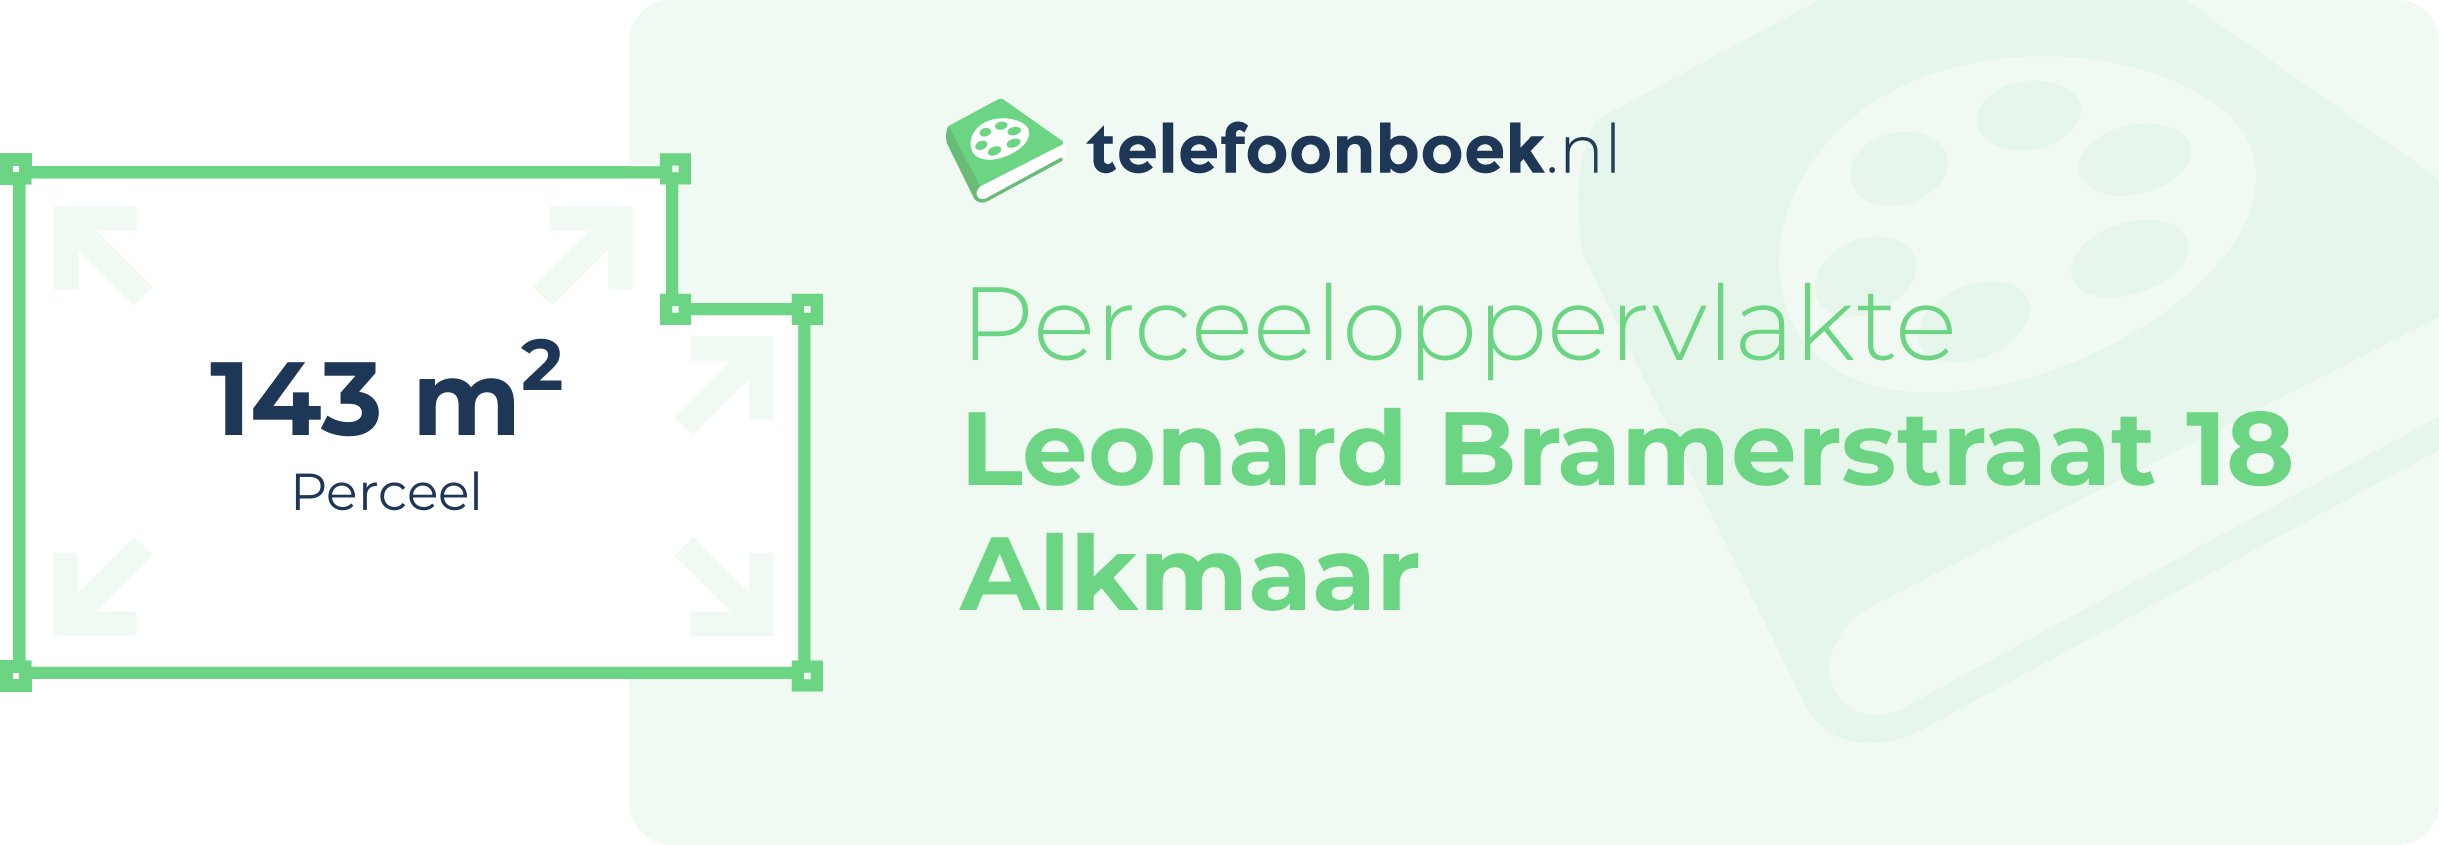 Perceeloppervlakte Leonard Bramerstraat 18 Alkmaar